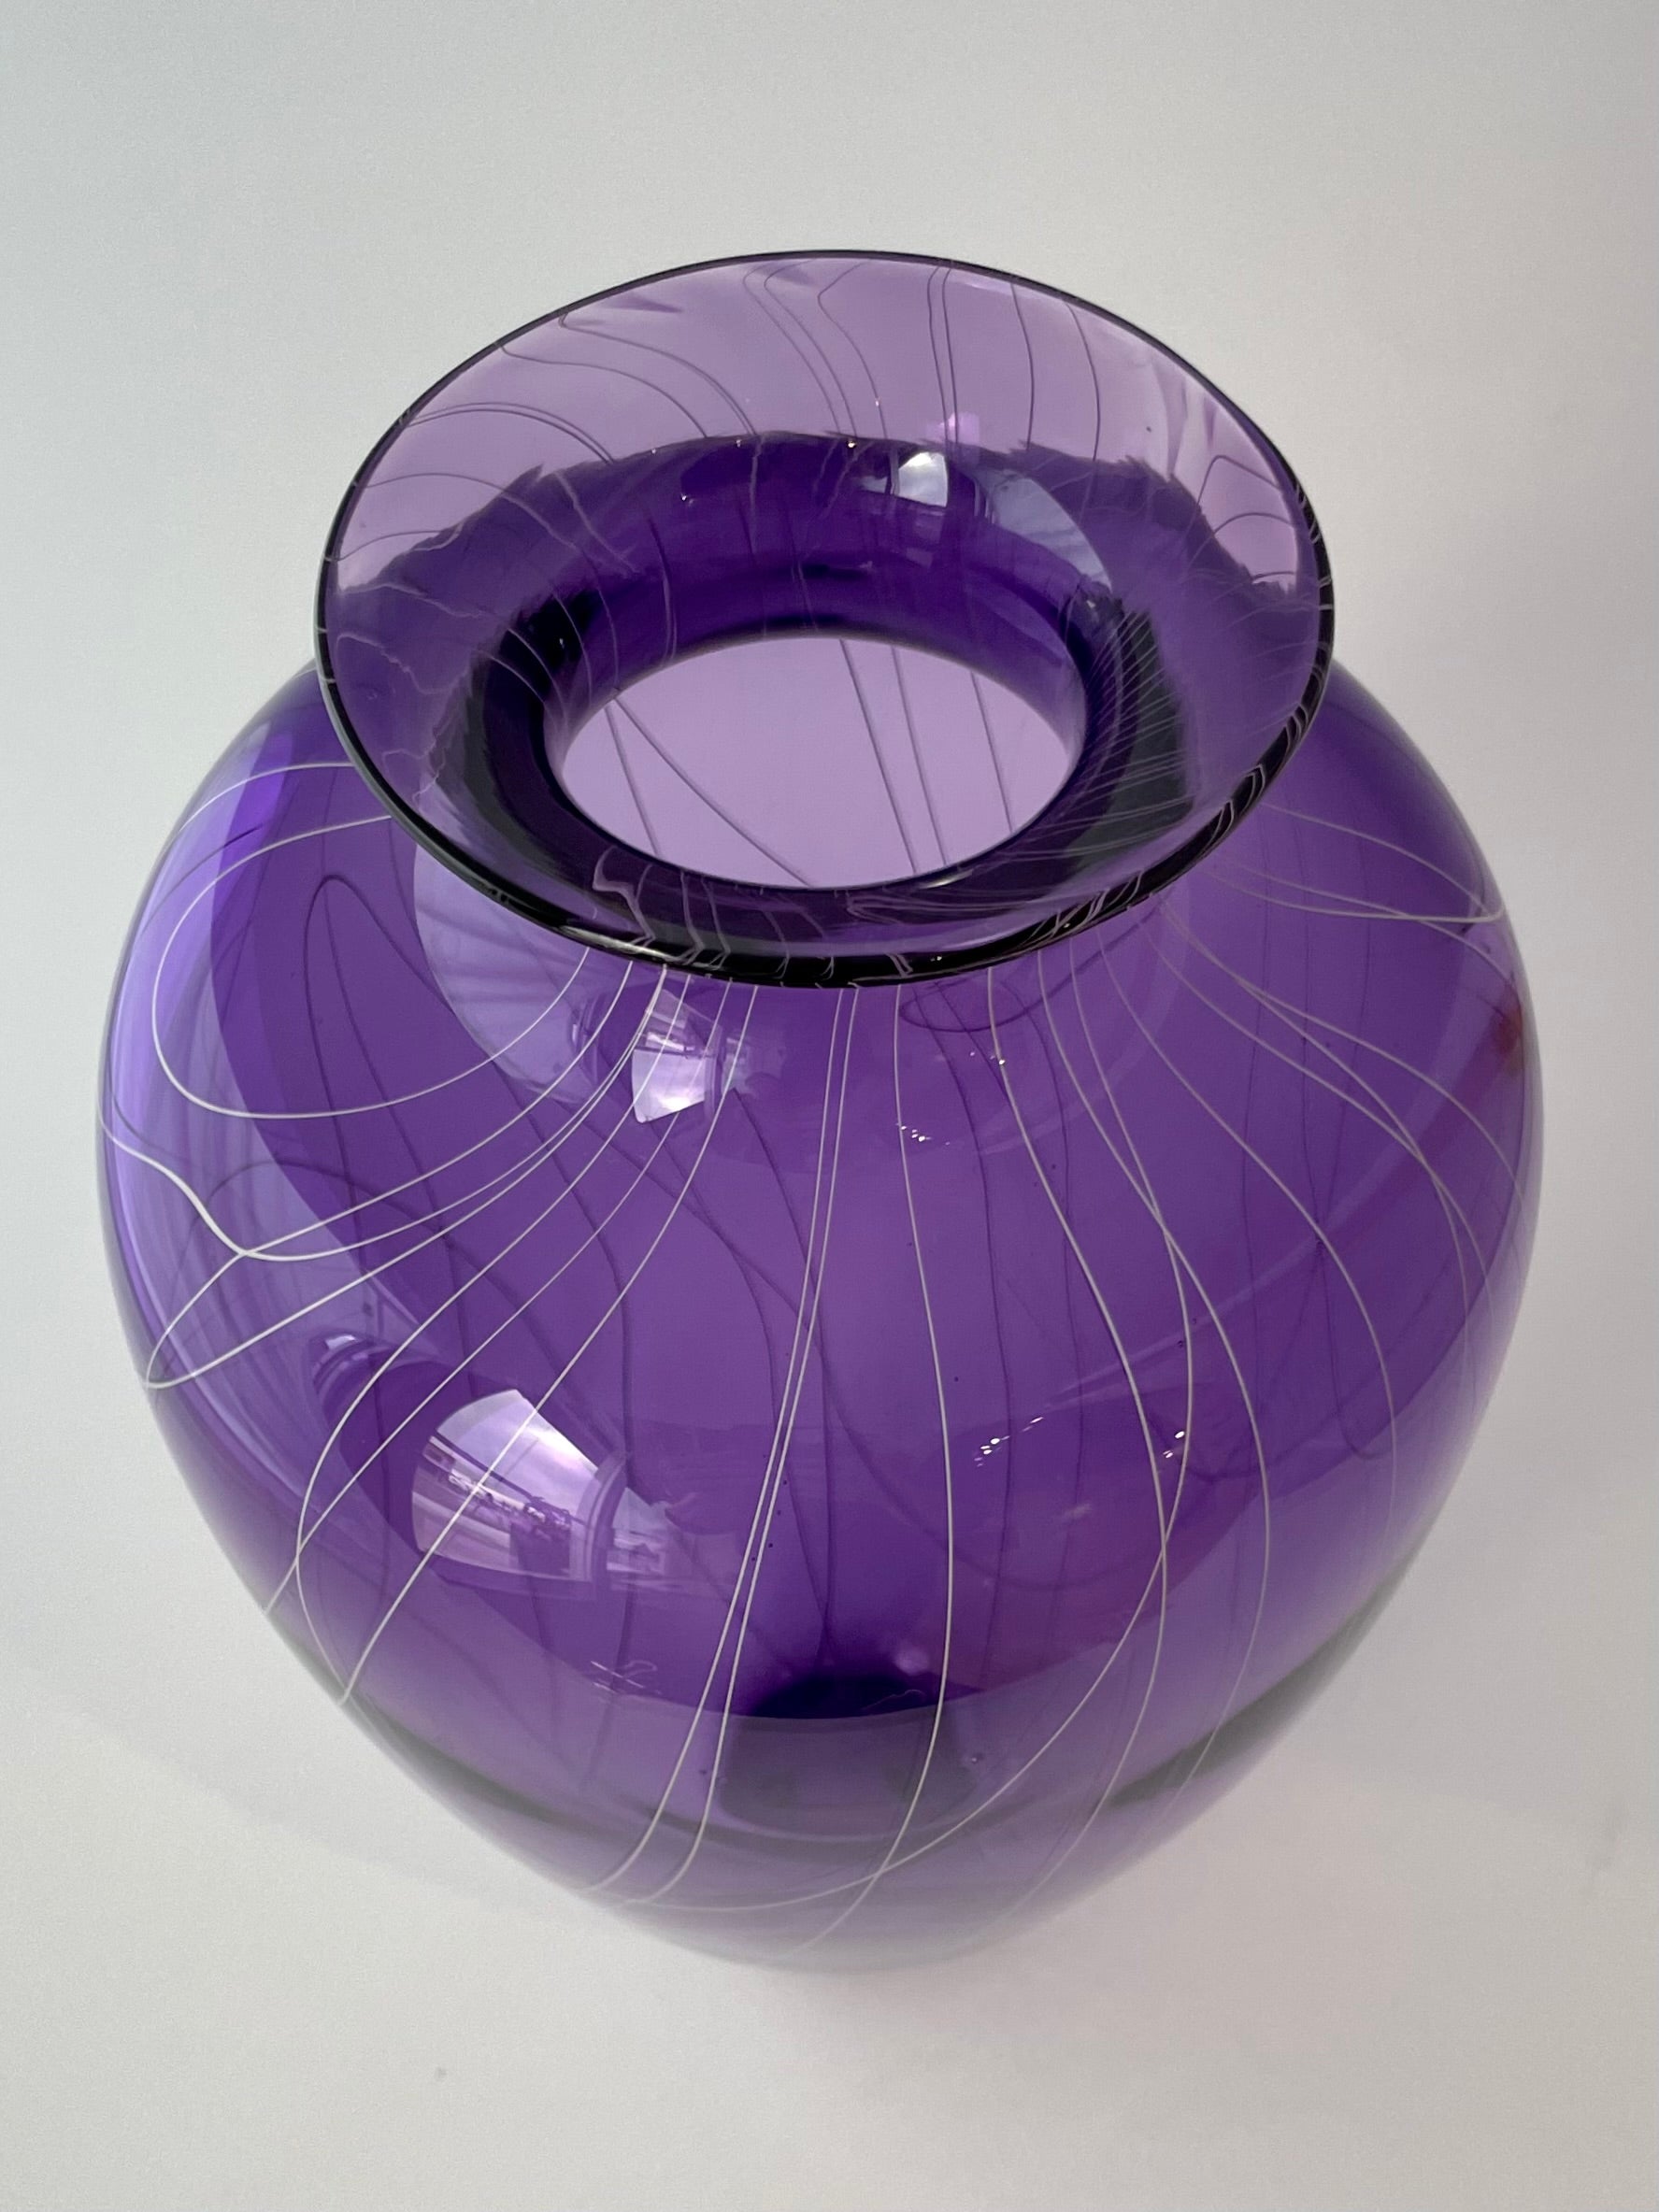 Sketch Series Vase - Medium Purple/White